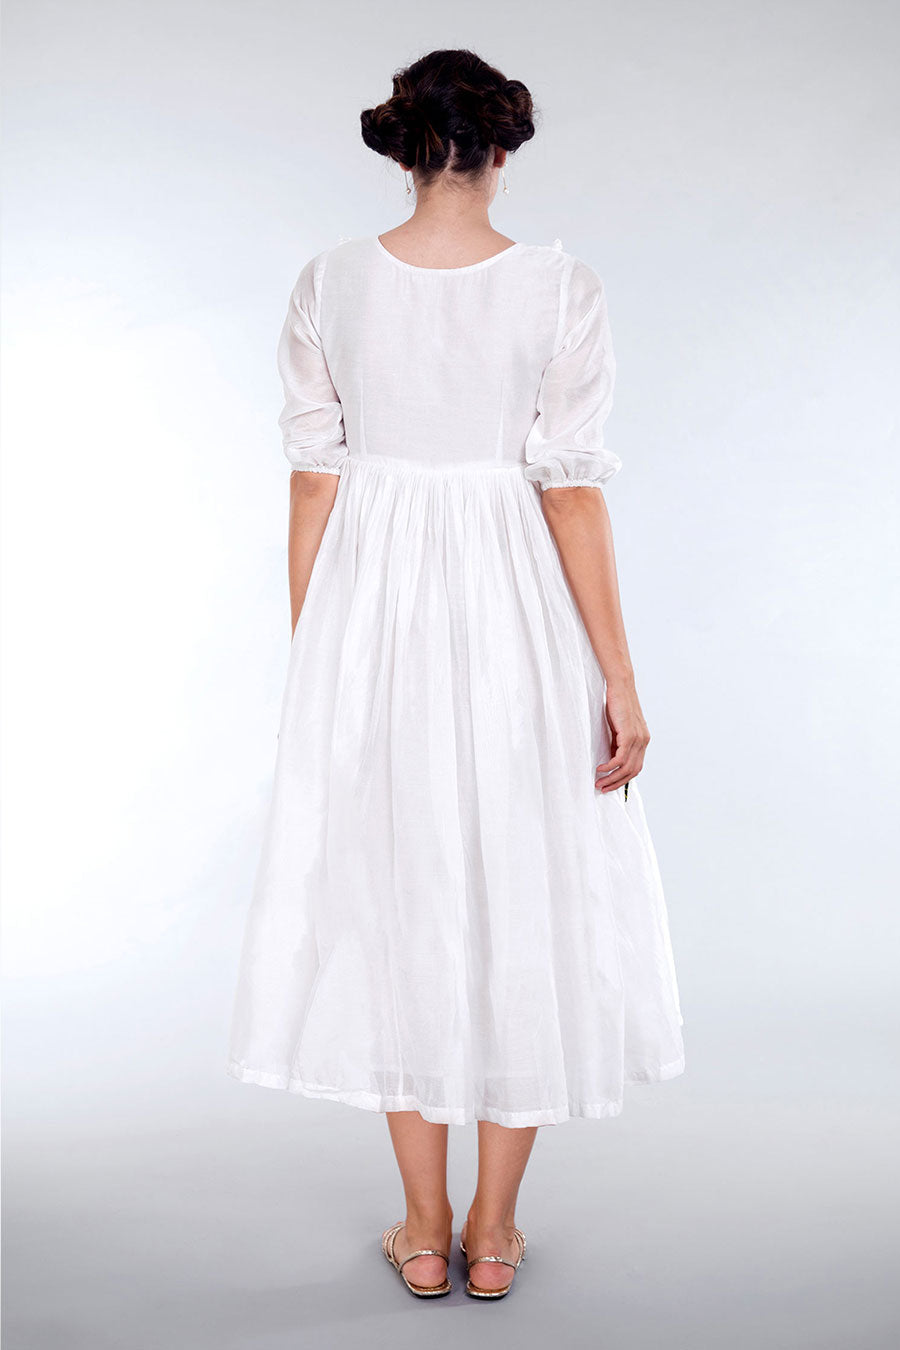 Pearl White Maiden Dress